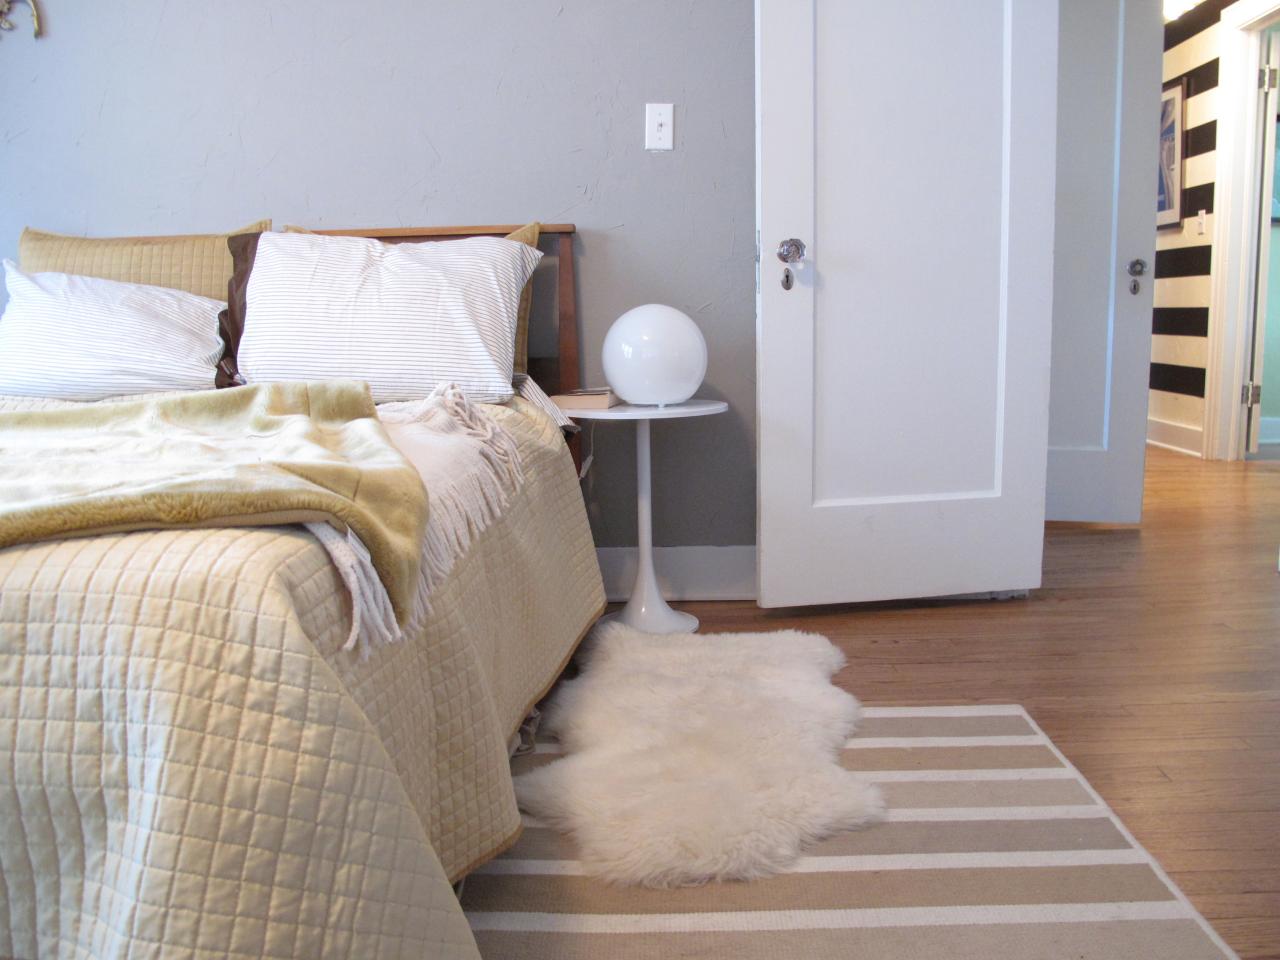 Bedroom Carpet Ideas: Pictures, Options & Ideas | HGTV